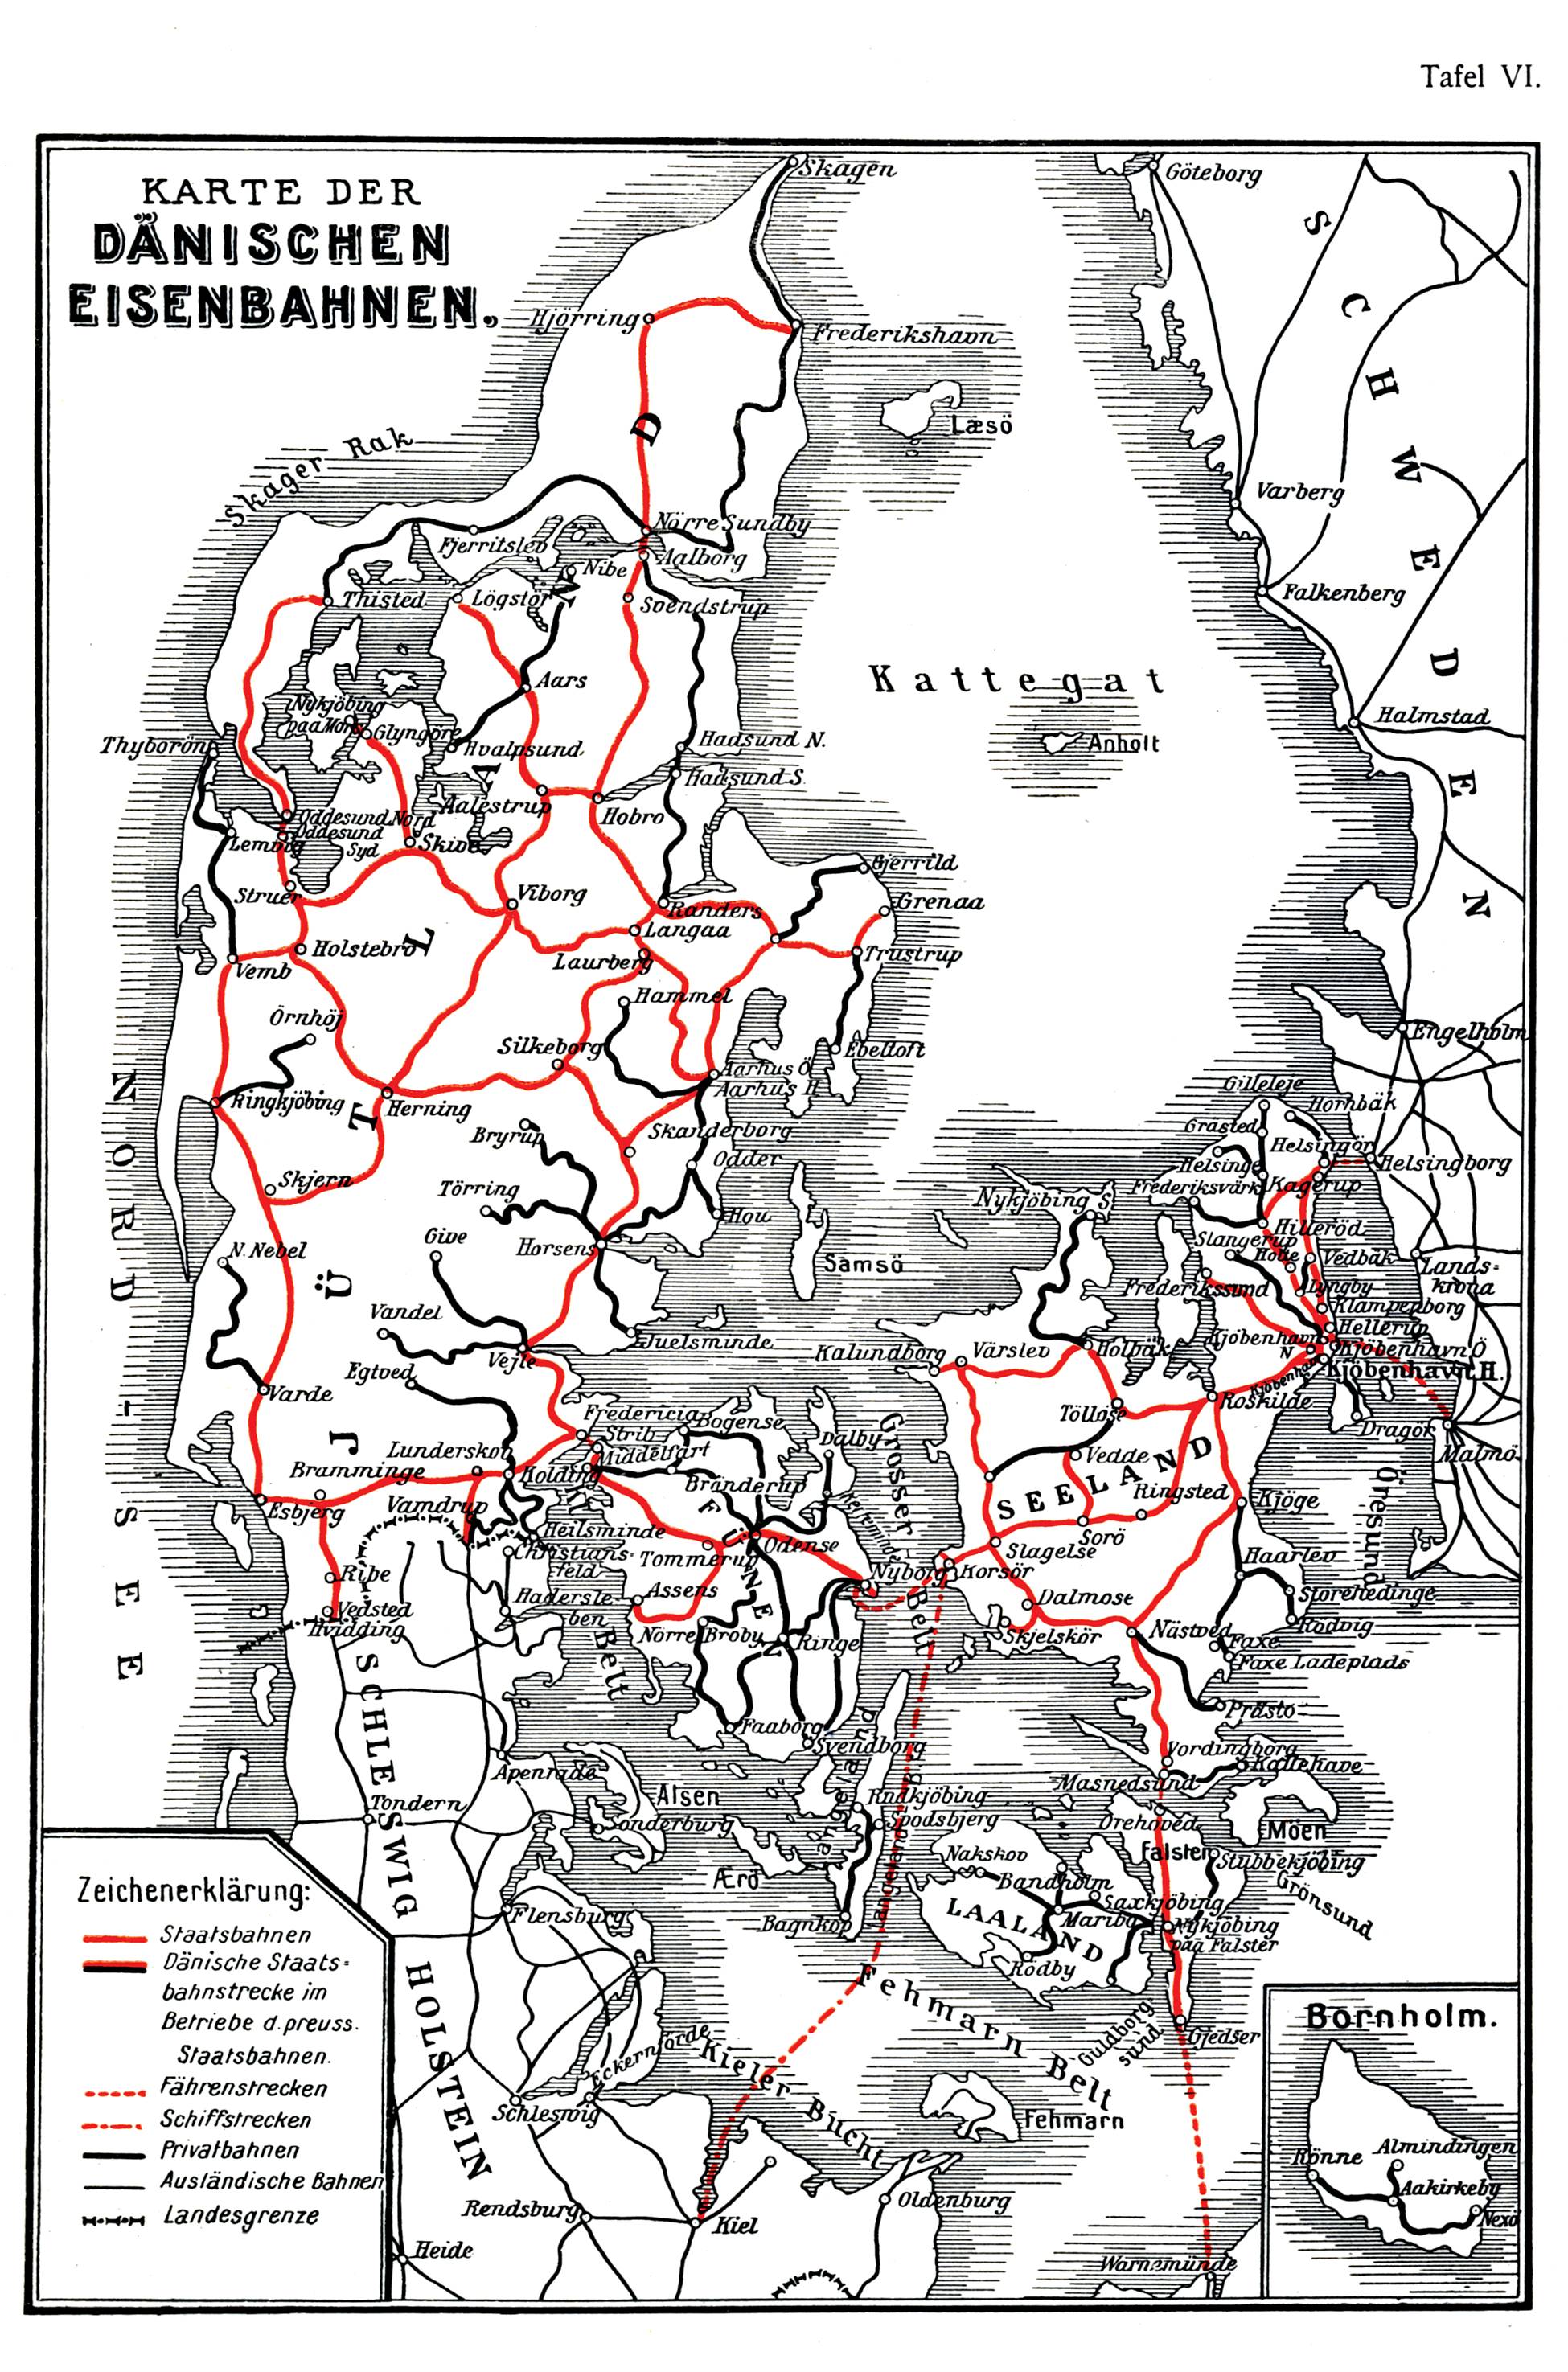 eisenbahn dänemark karte File Roell 1912 Karte Der Danischen Eisenbahnen Jpg Wikimedia Commons eisenbahn dänemark karte